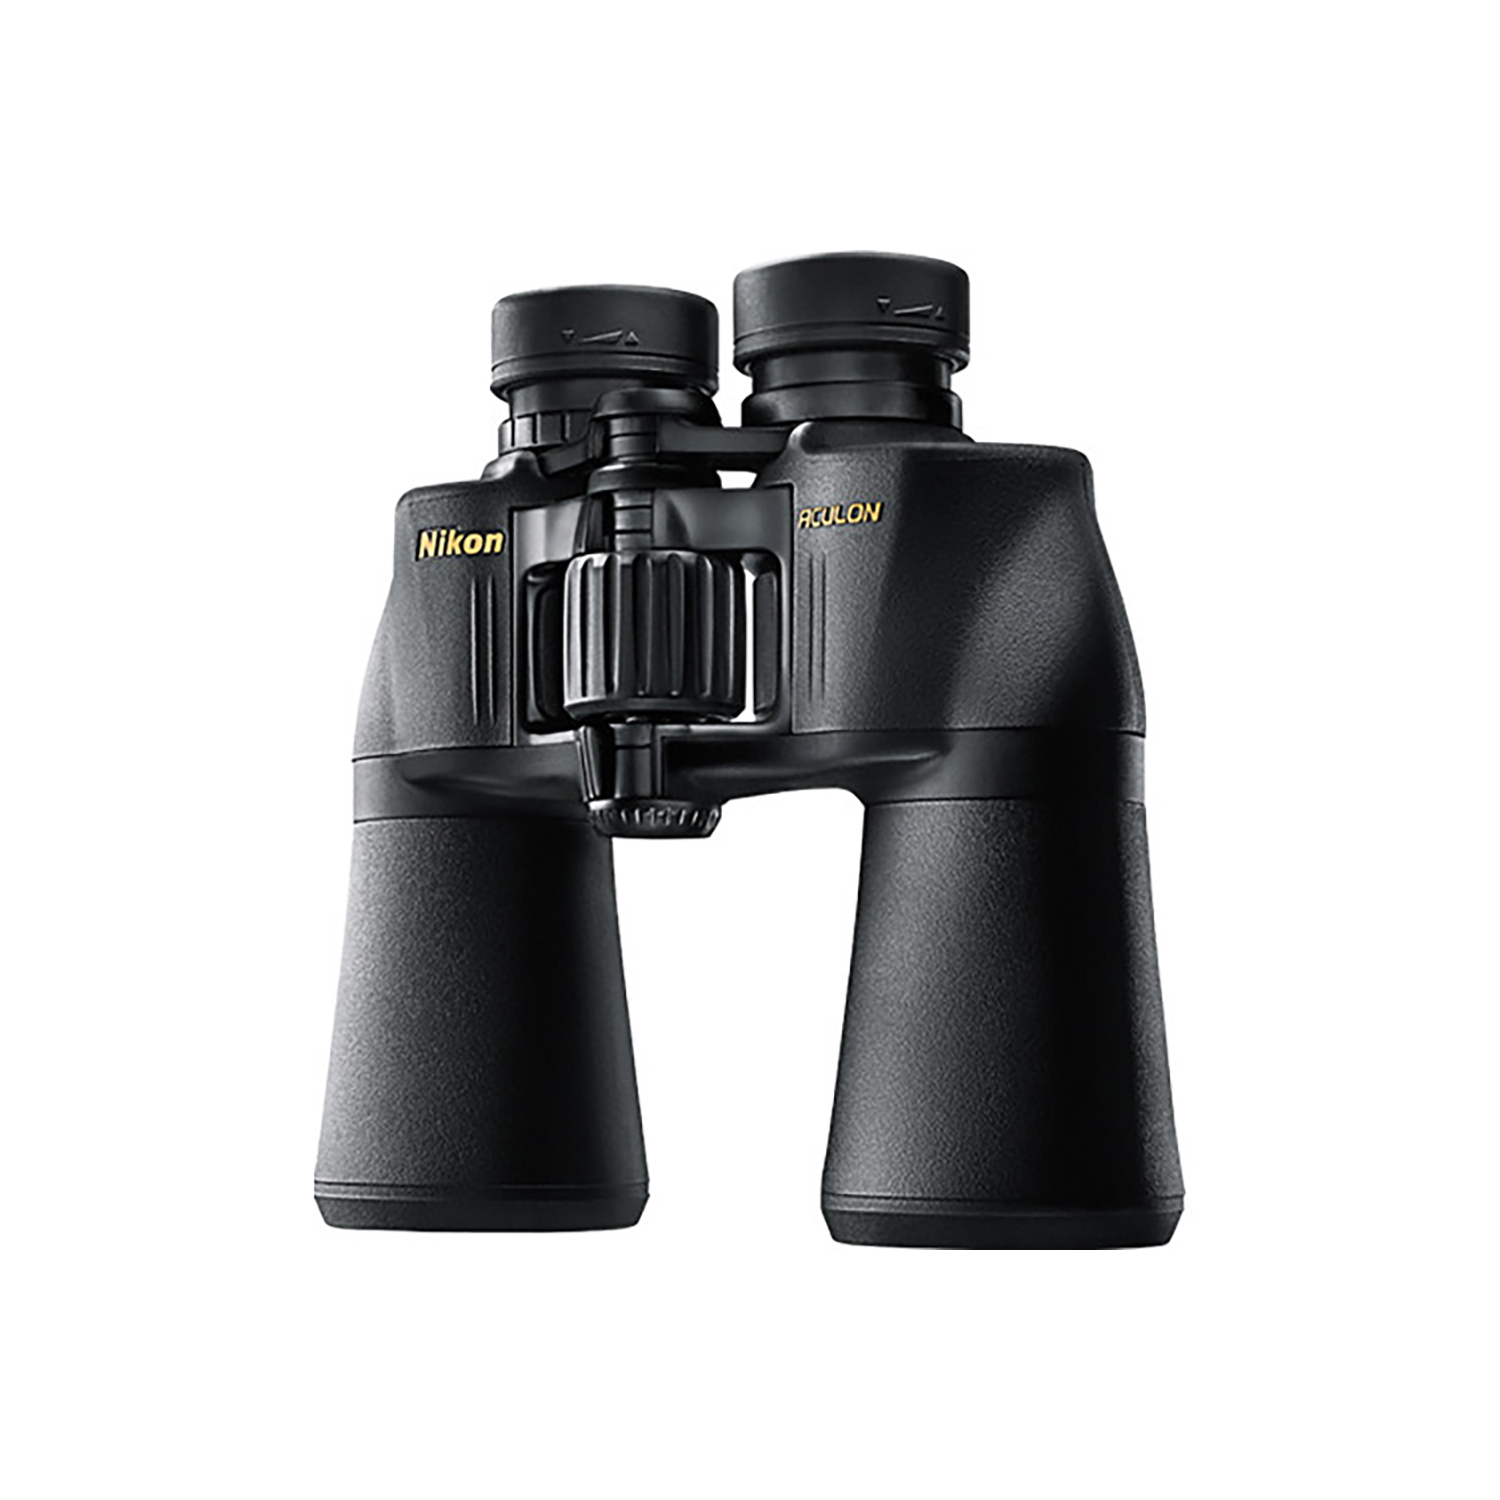 Binoculaires Nikon Aculon A211 - 16x50